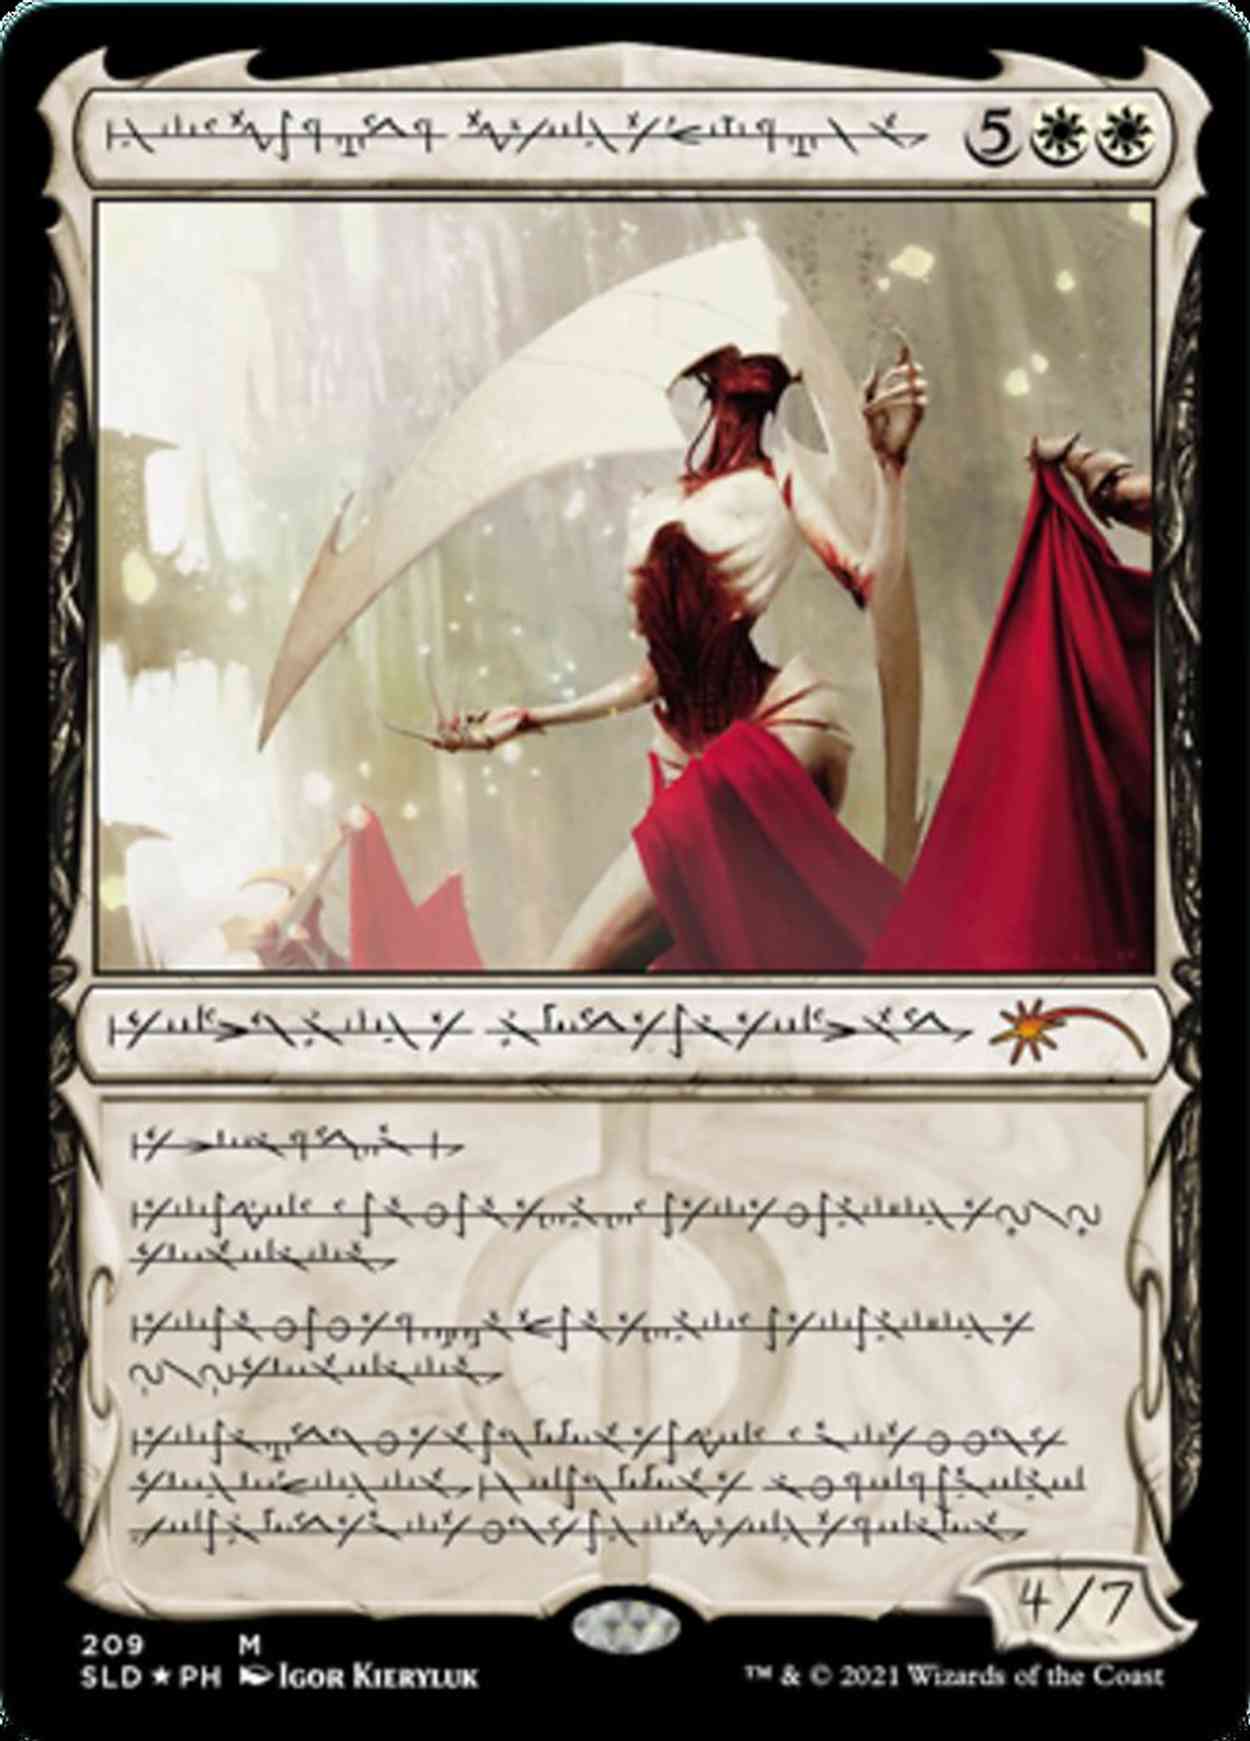 Elesh Norn, Grand Cenobite magic card front